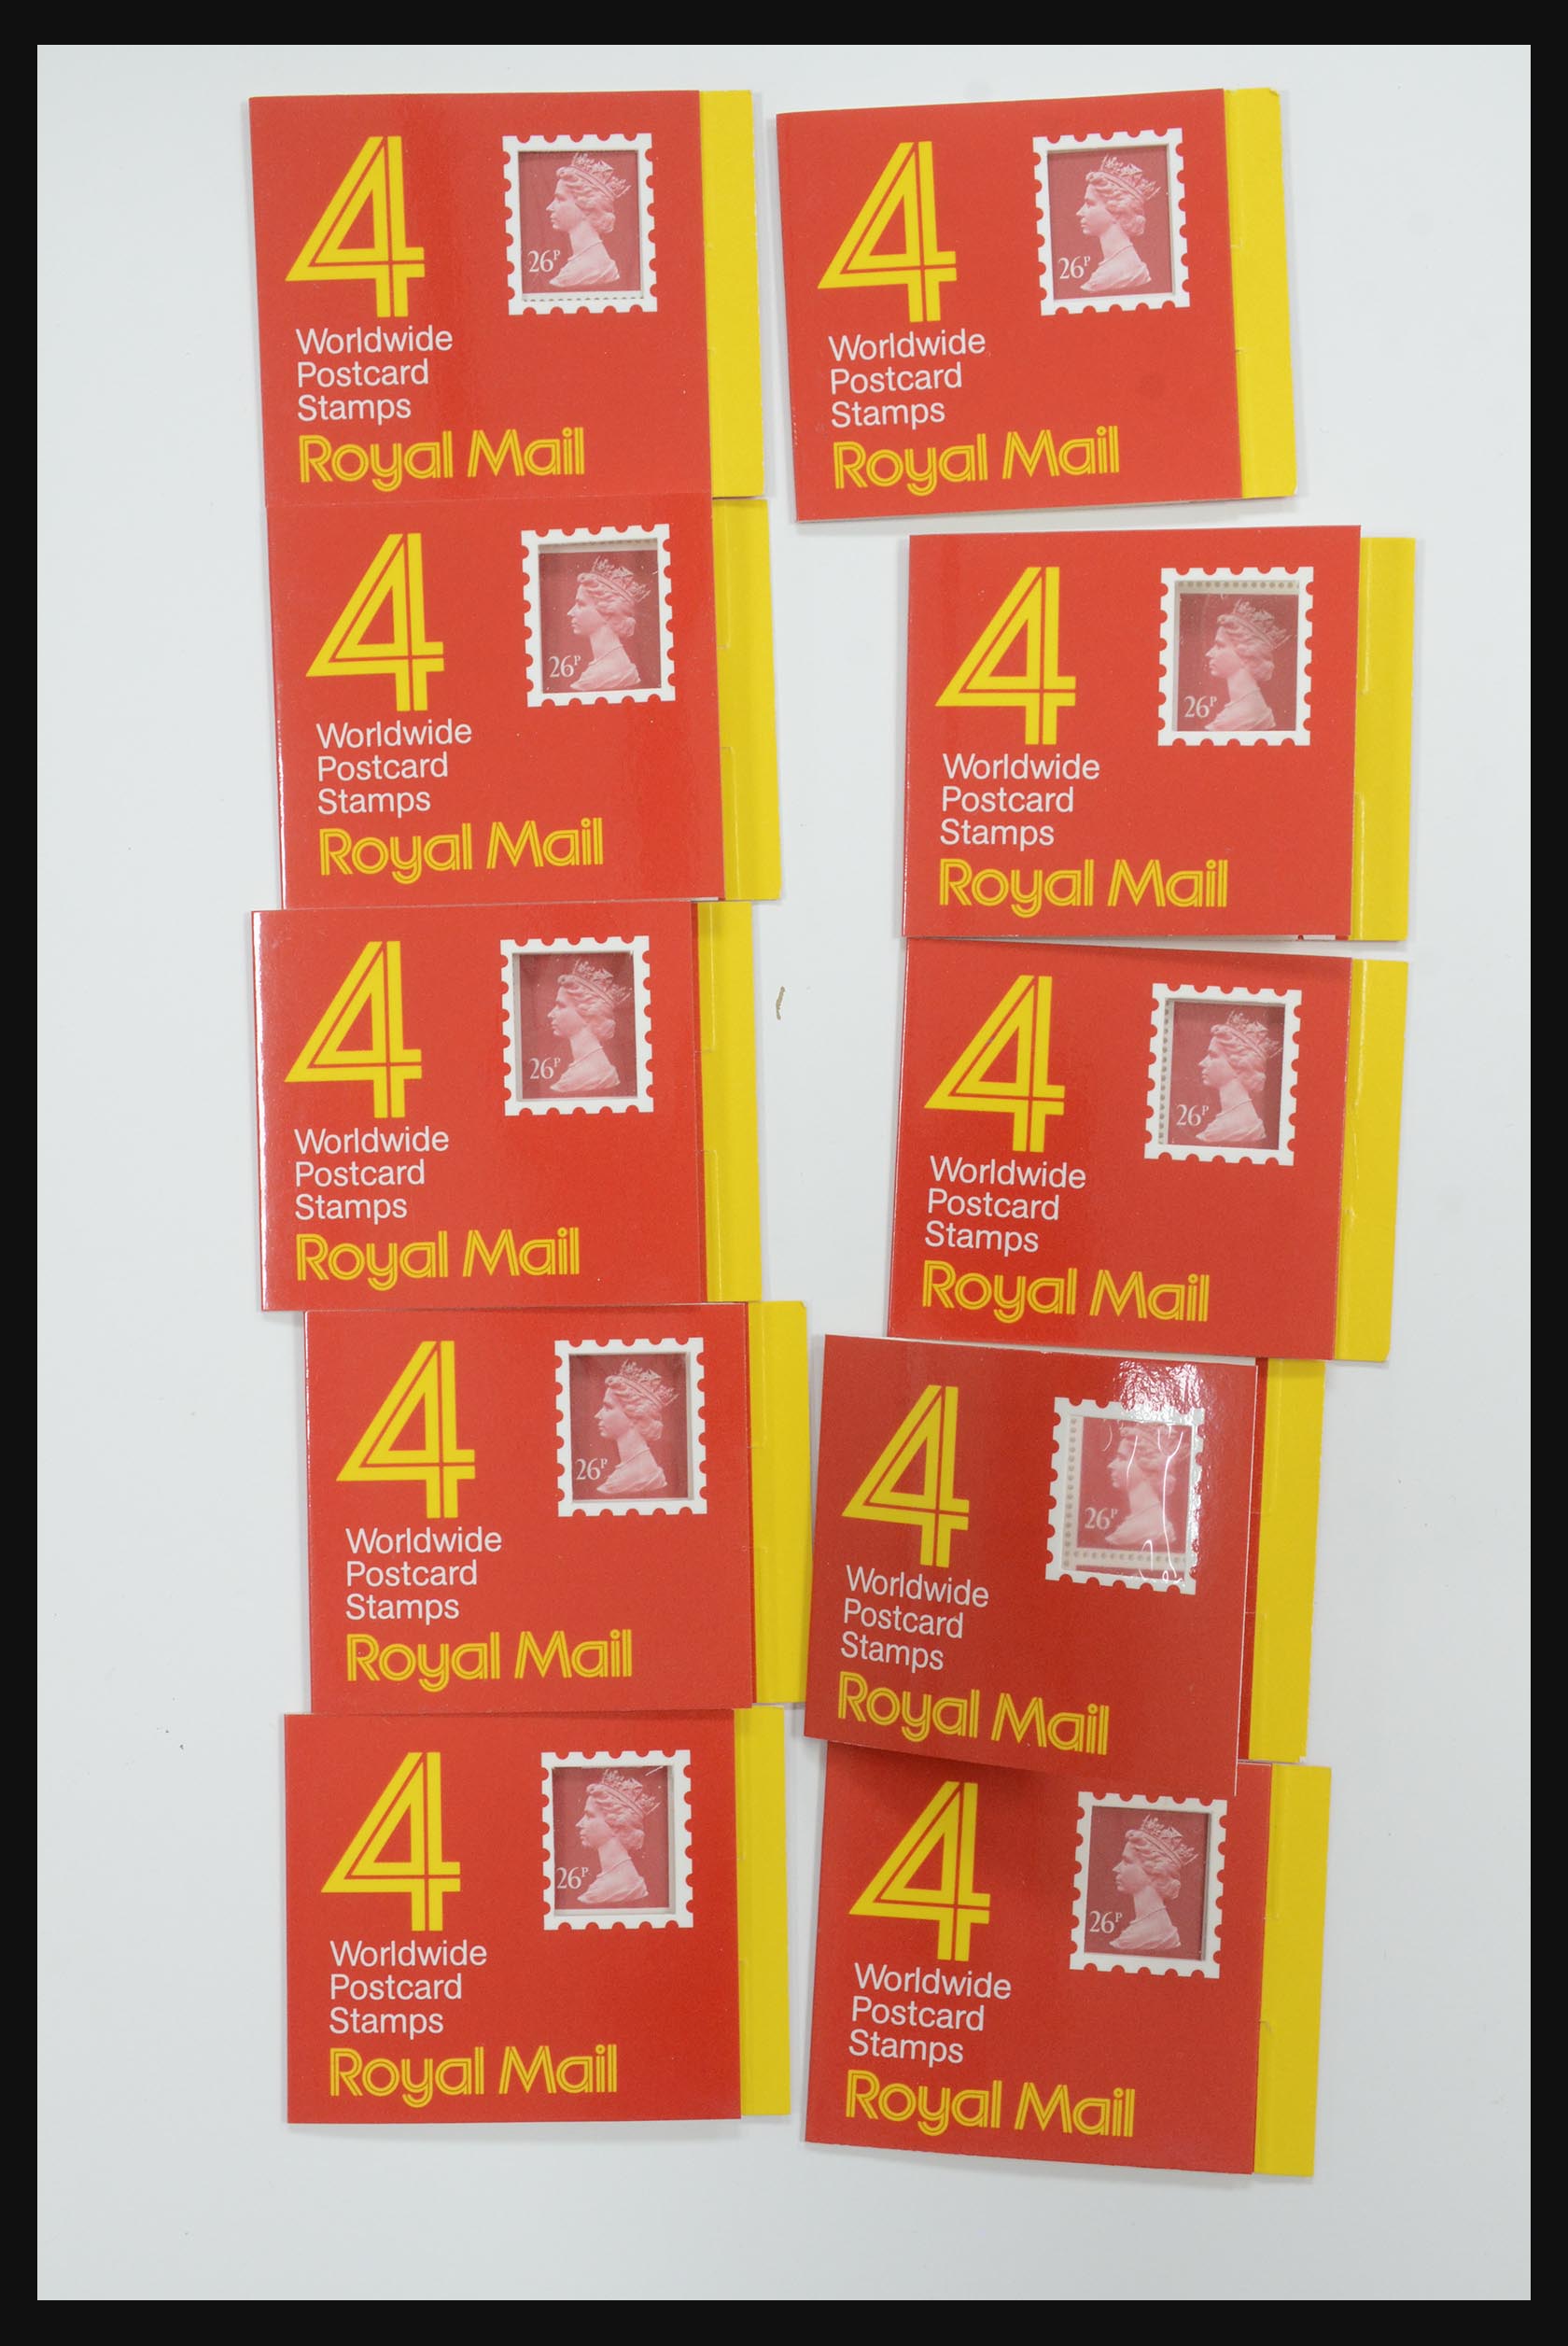 31961 068 - 31961 Great Britain stampbooklets 1971-1999.